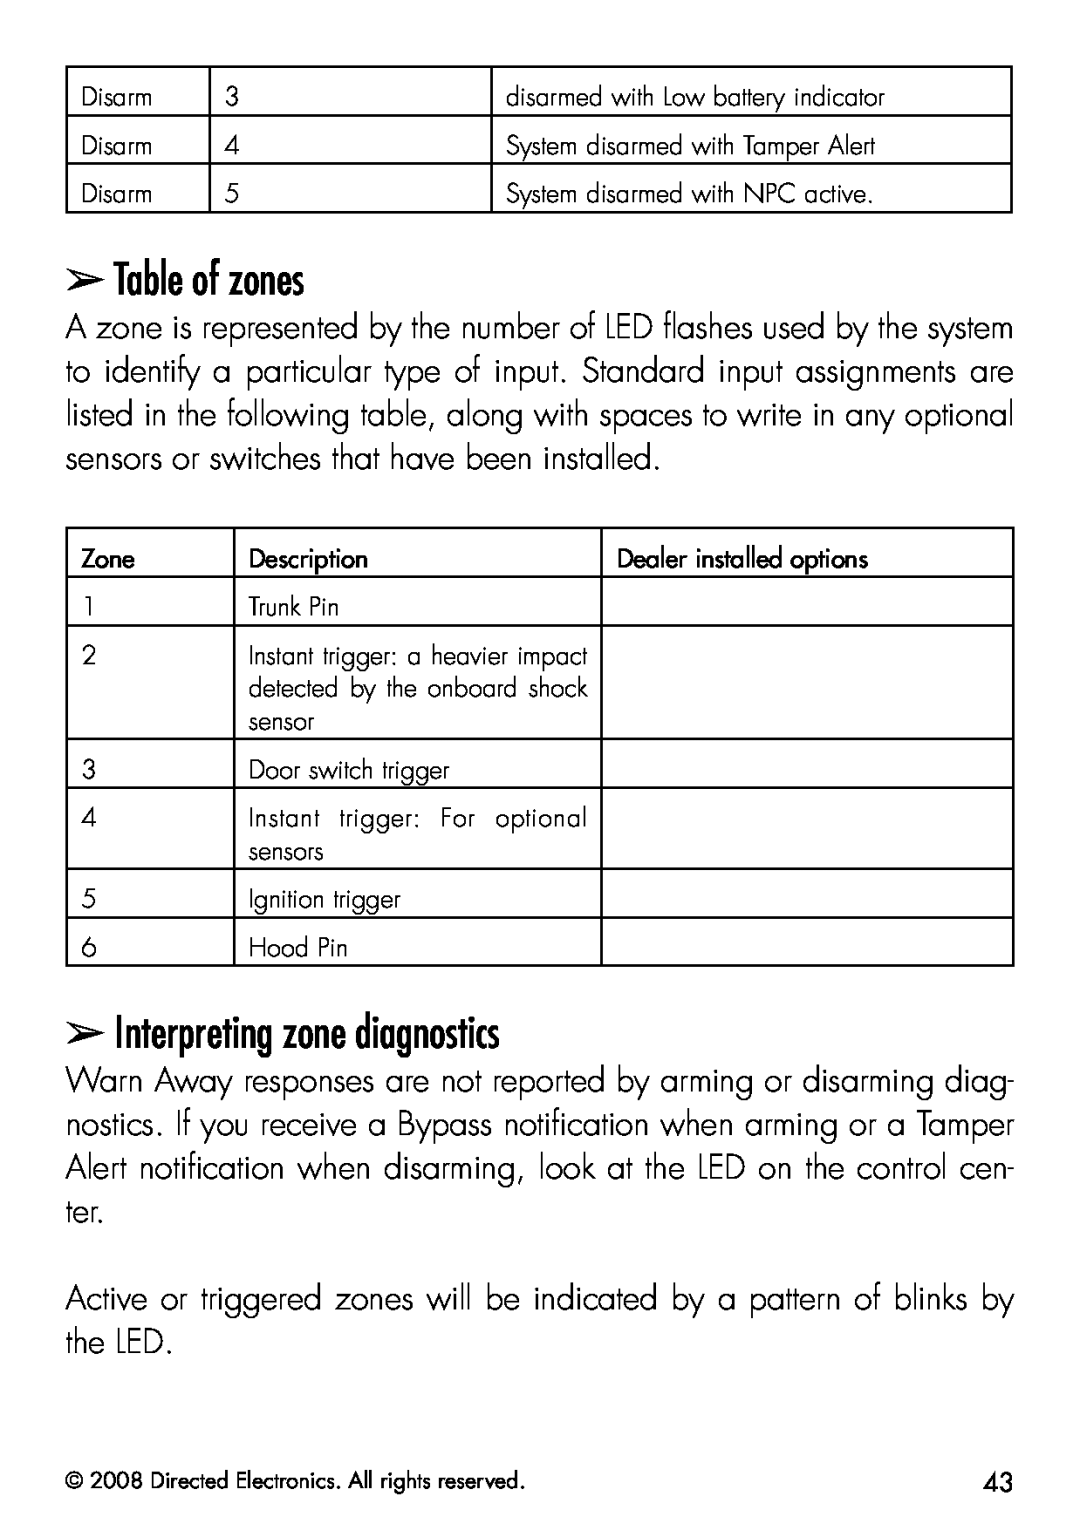 Viper 5901 manual Table of zones, Interpreting zone diagnostics 